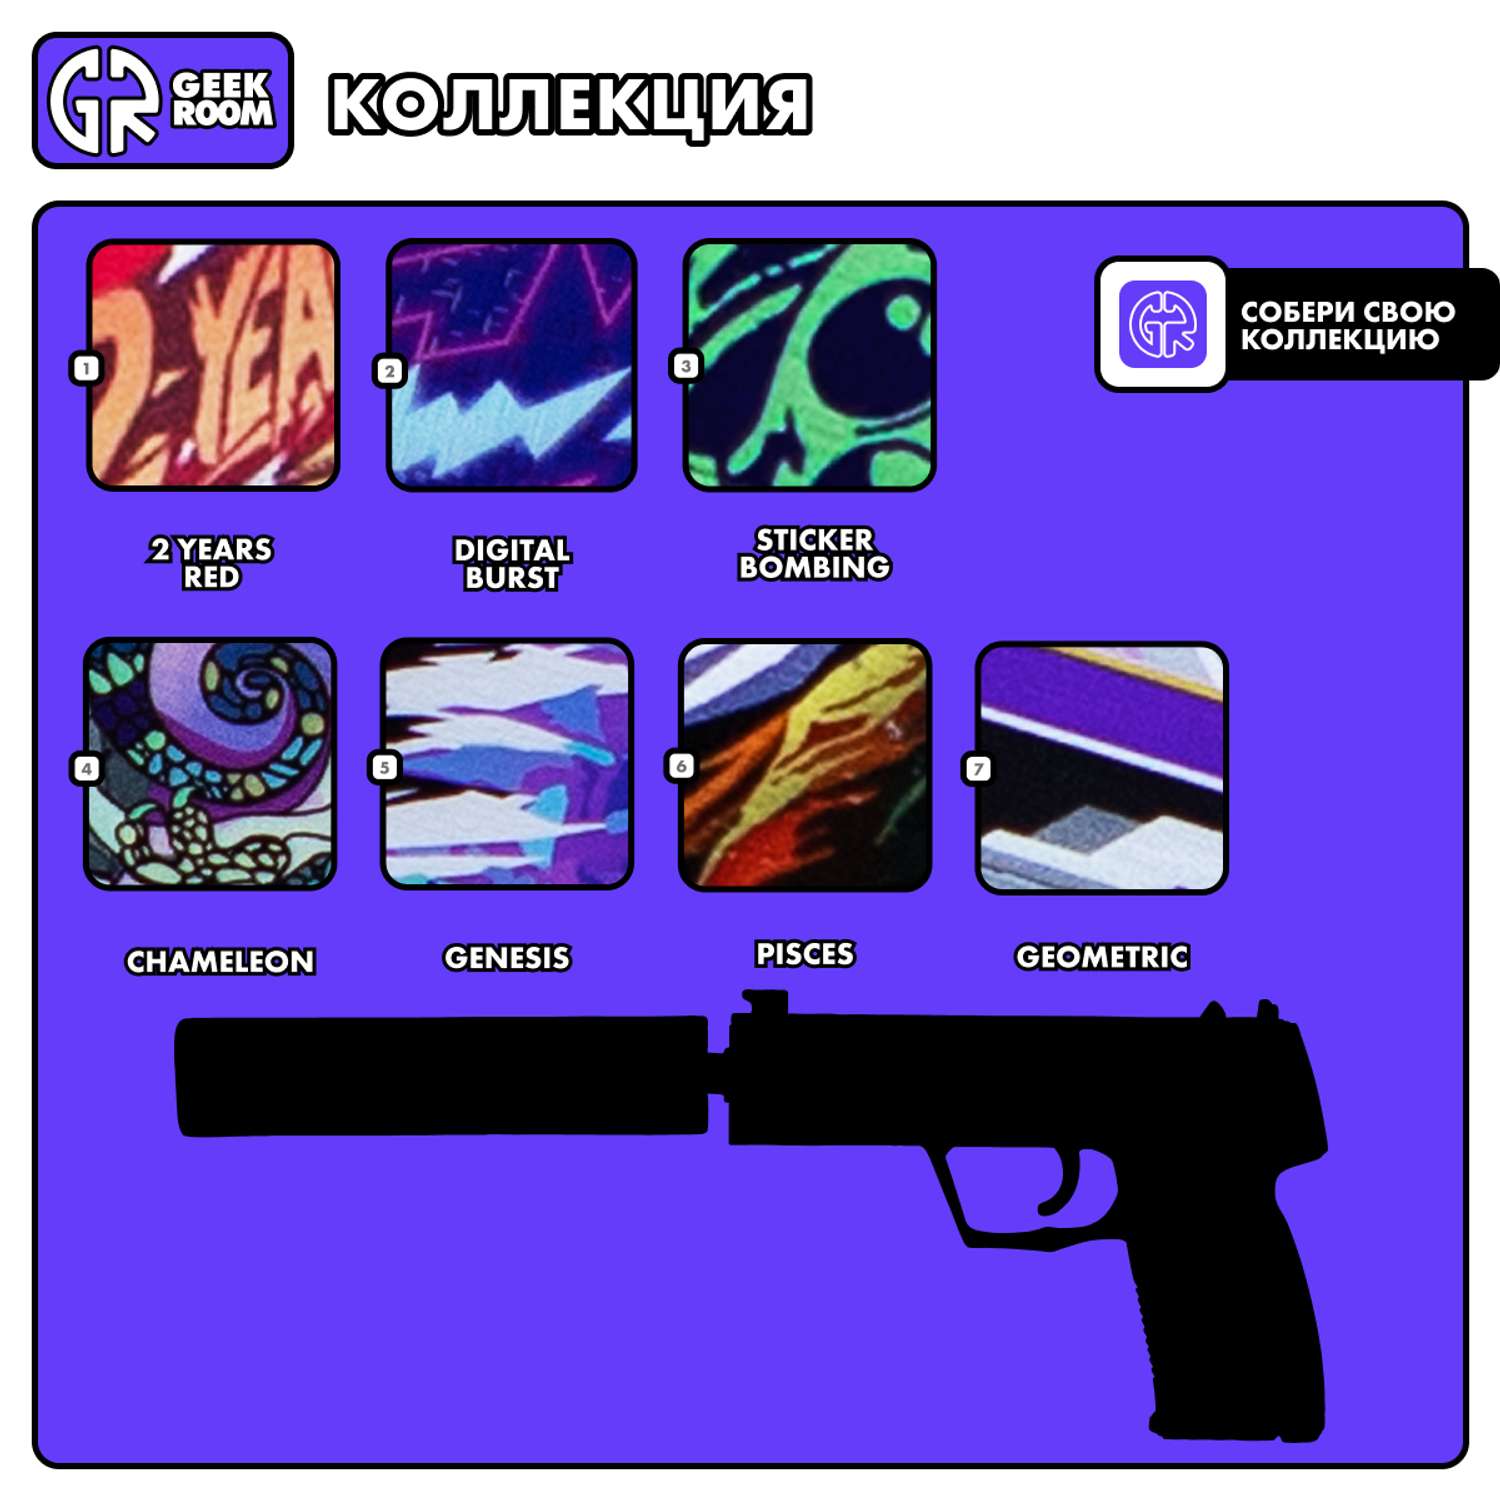 Пистолет USP GEEKROOM Genesis резинкостел - фото 8